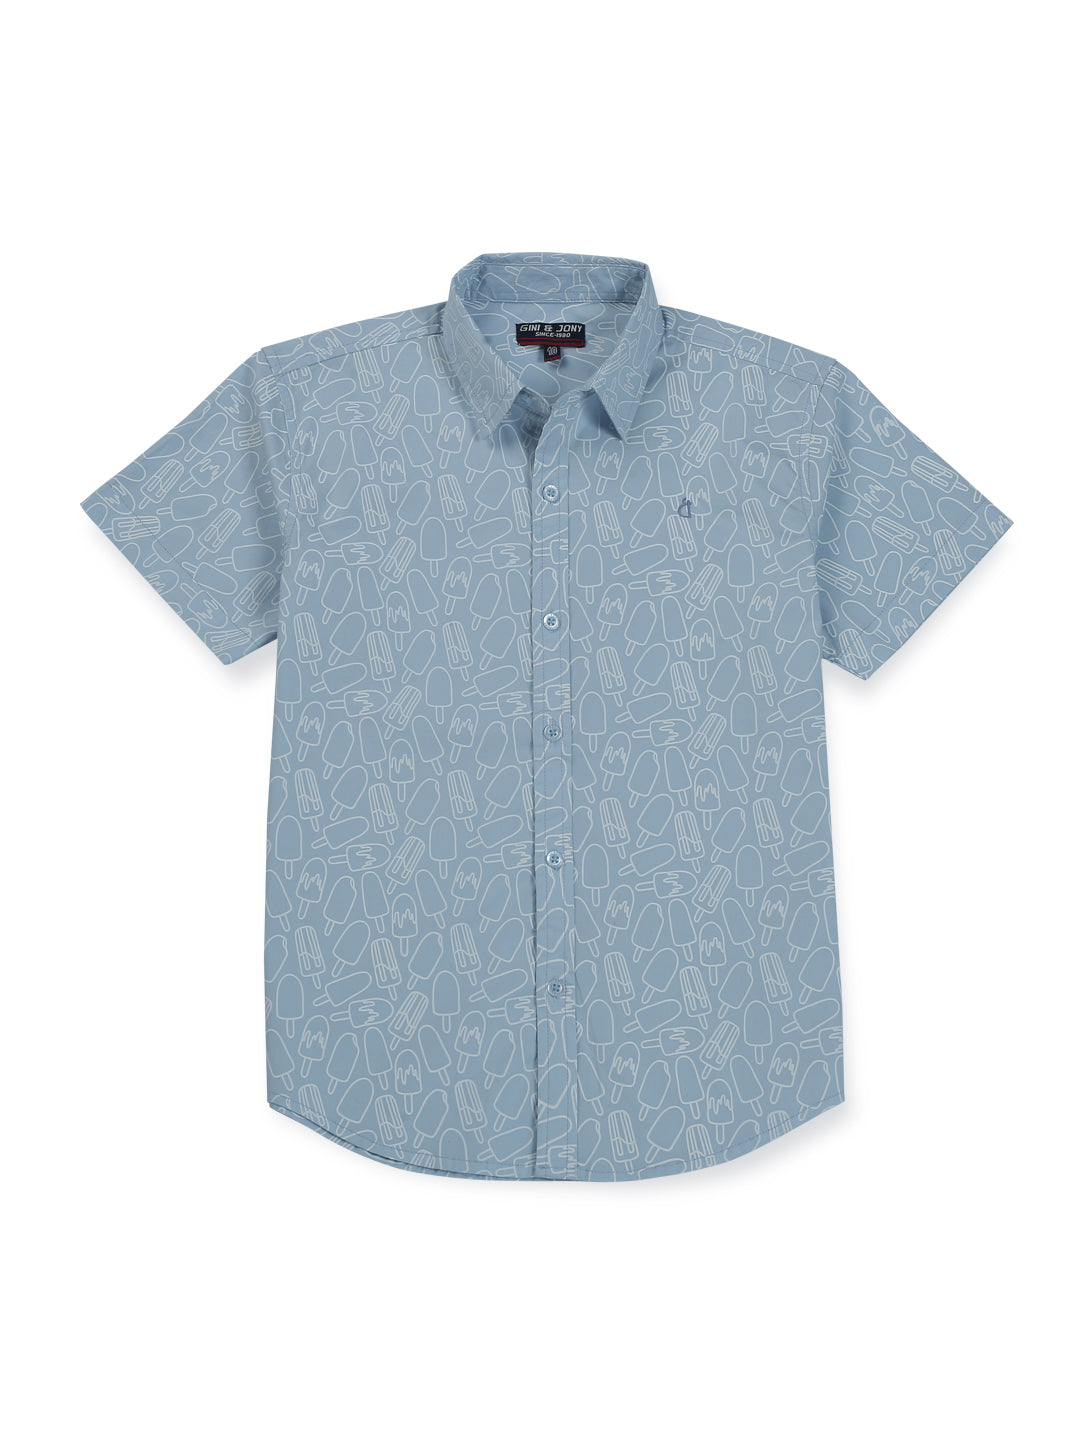 Boys Blue Cotton Printed Shirt